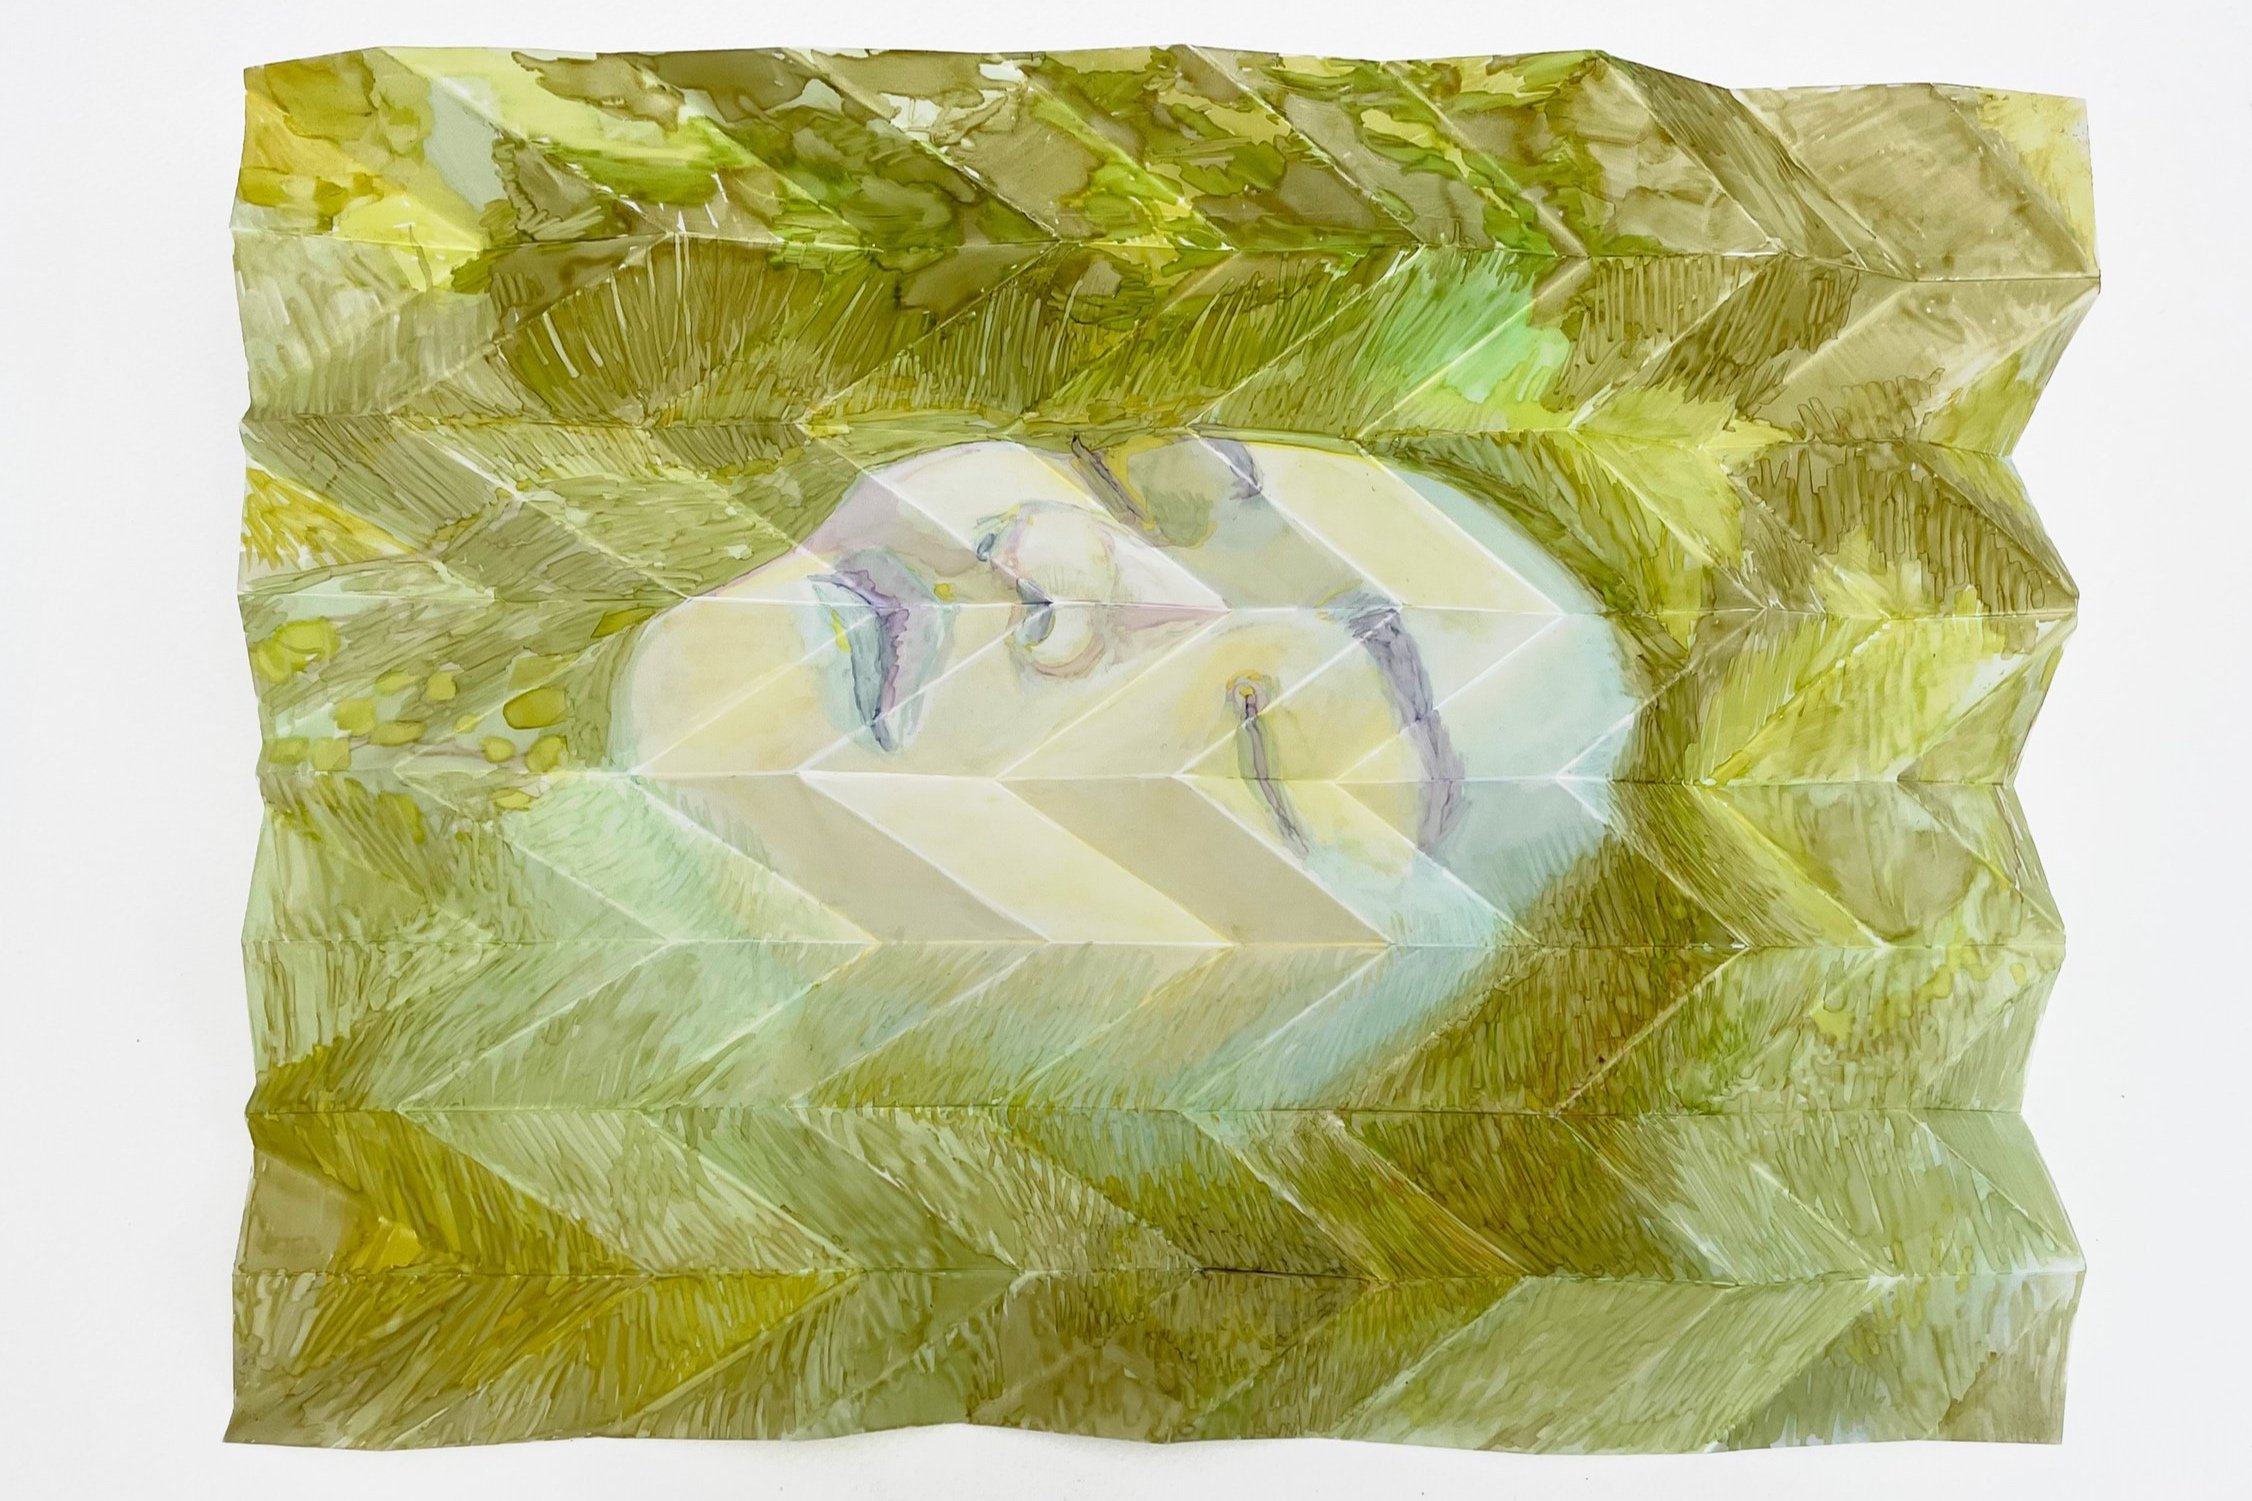 River, promarker on yupo translucent paper, 32 x 24 cm, 2022